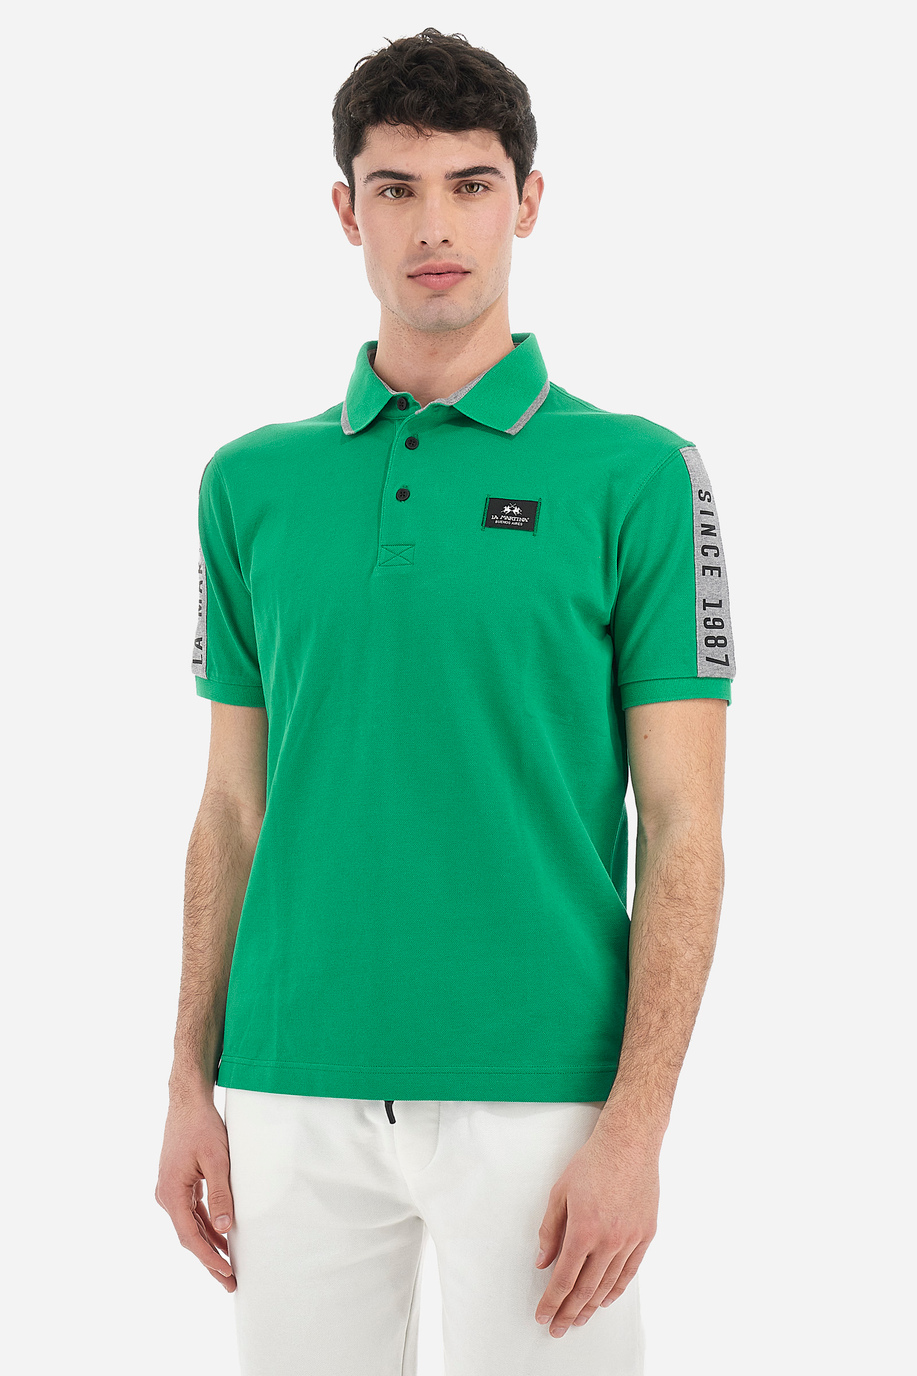 Kurzarm-Poloshirt für Herren Logos Maxi stilisiertes Logo in Volltonfarbe - Velyo - Poloshirts | La Martina - Official Online Shop